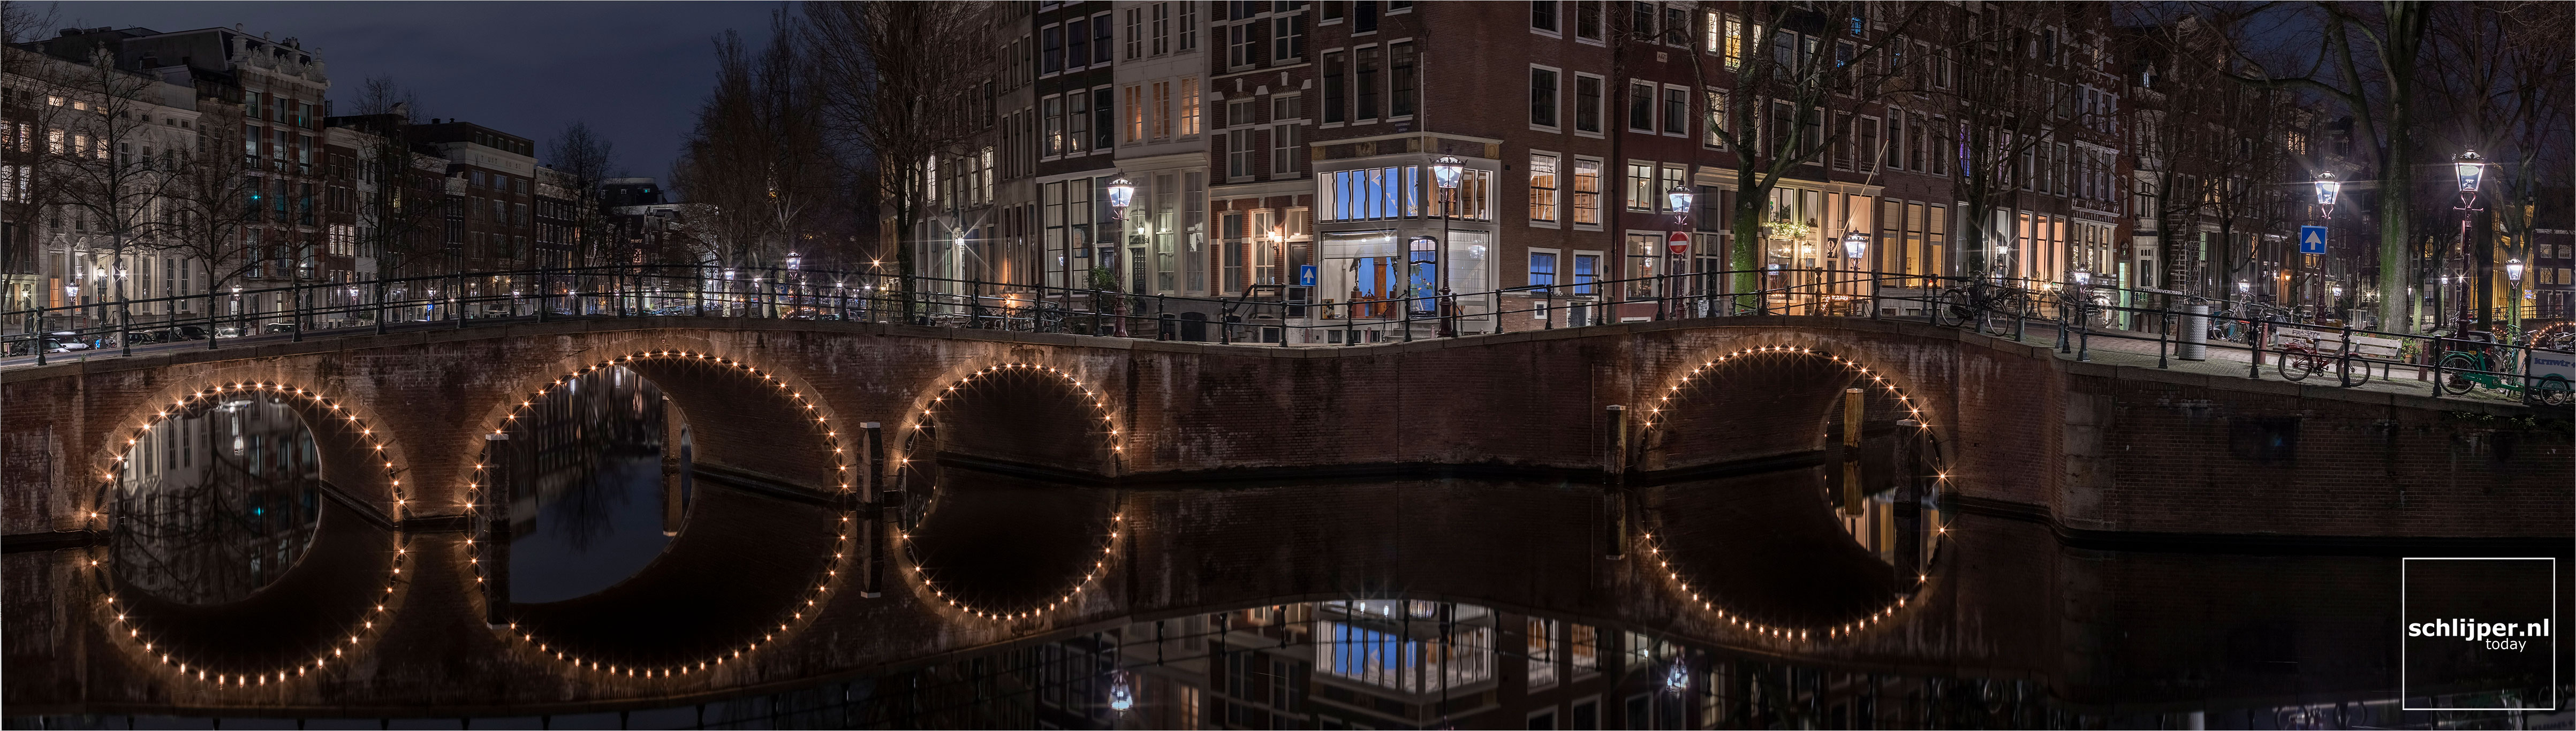 The Netherlands, Amsterdam, 25 december 2020